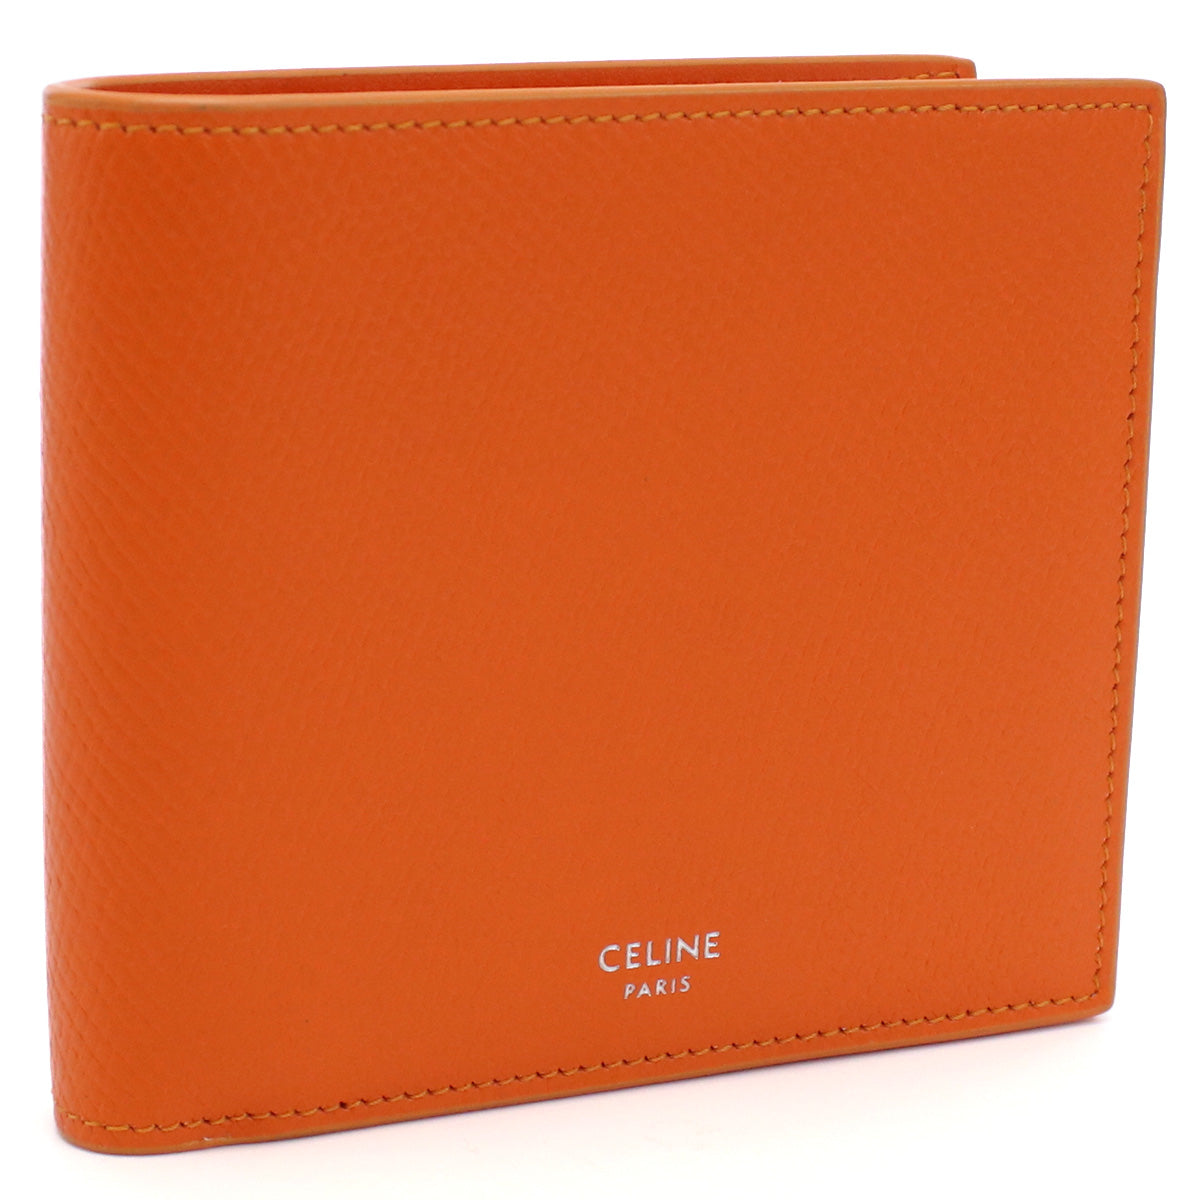 CELINE セリーヌ 10C87 二つ折り財布 FLUO ORANGE オレンジ系 メンズ